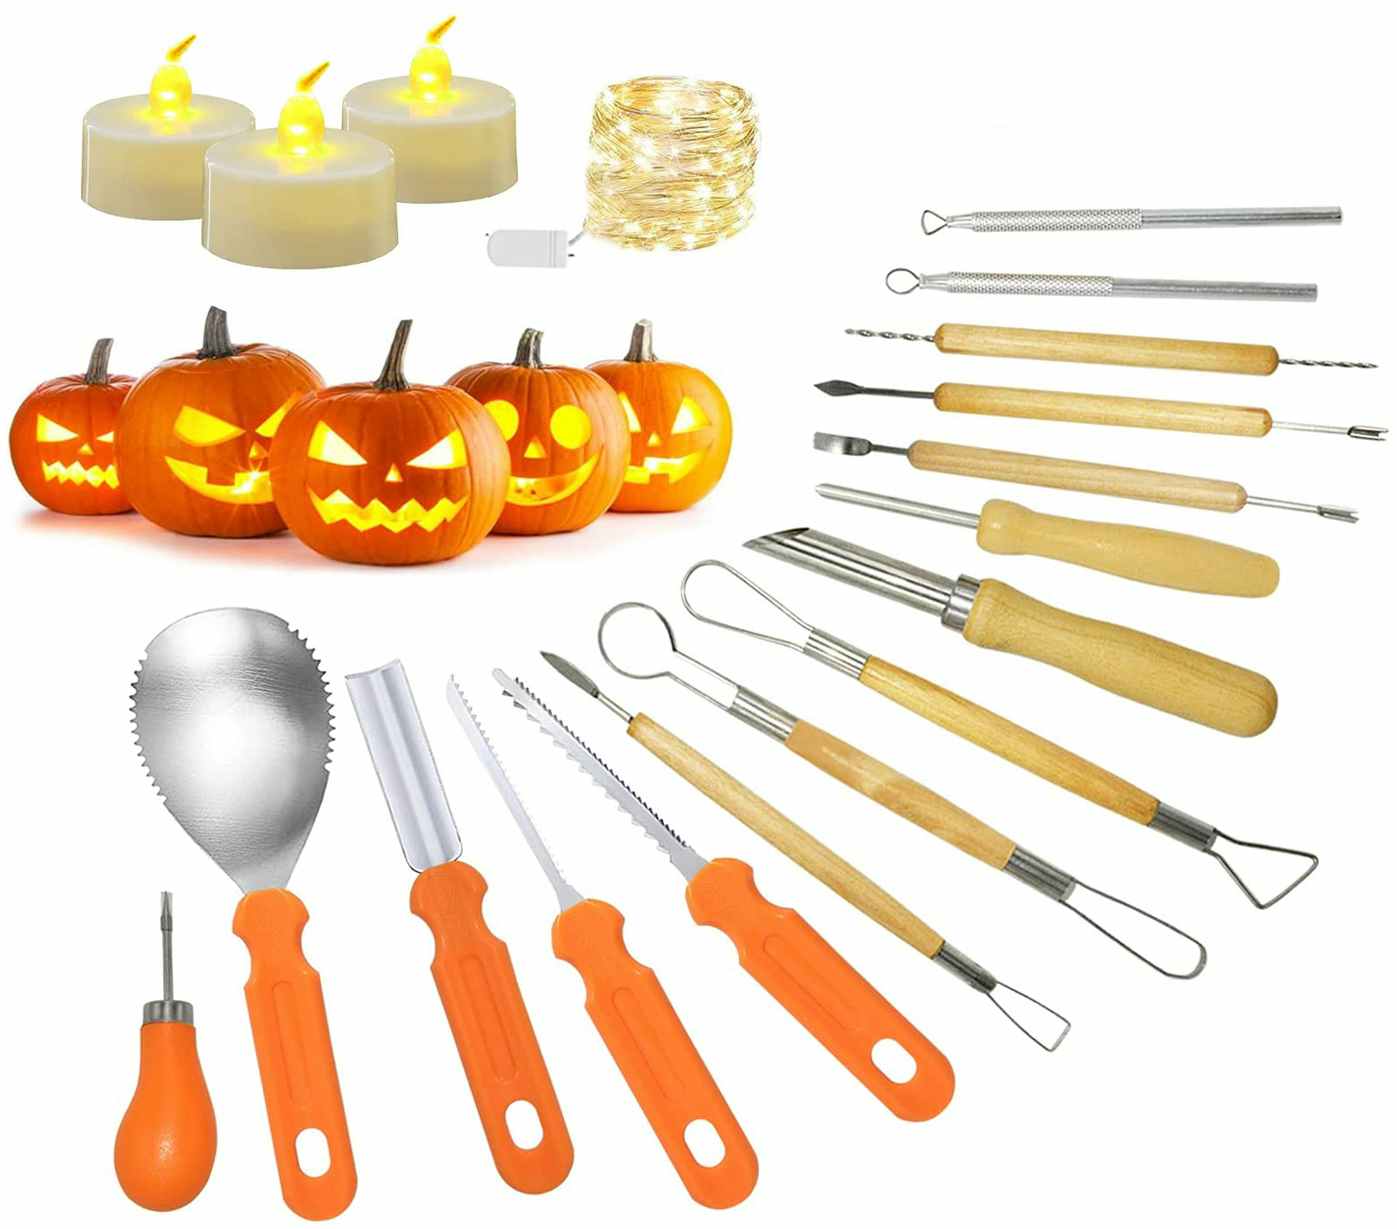 best pumpkin carving kit - A Madala Pumpkin Carving Kit on a white background